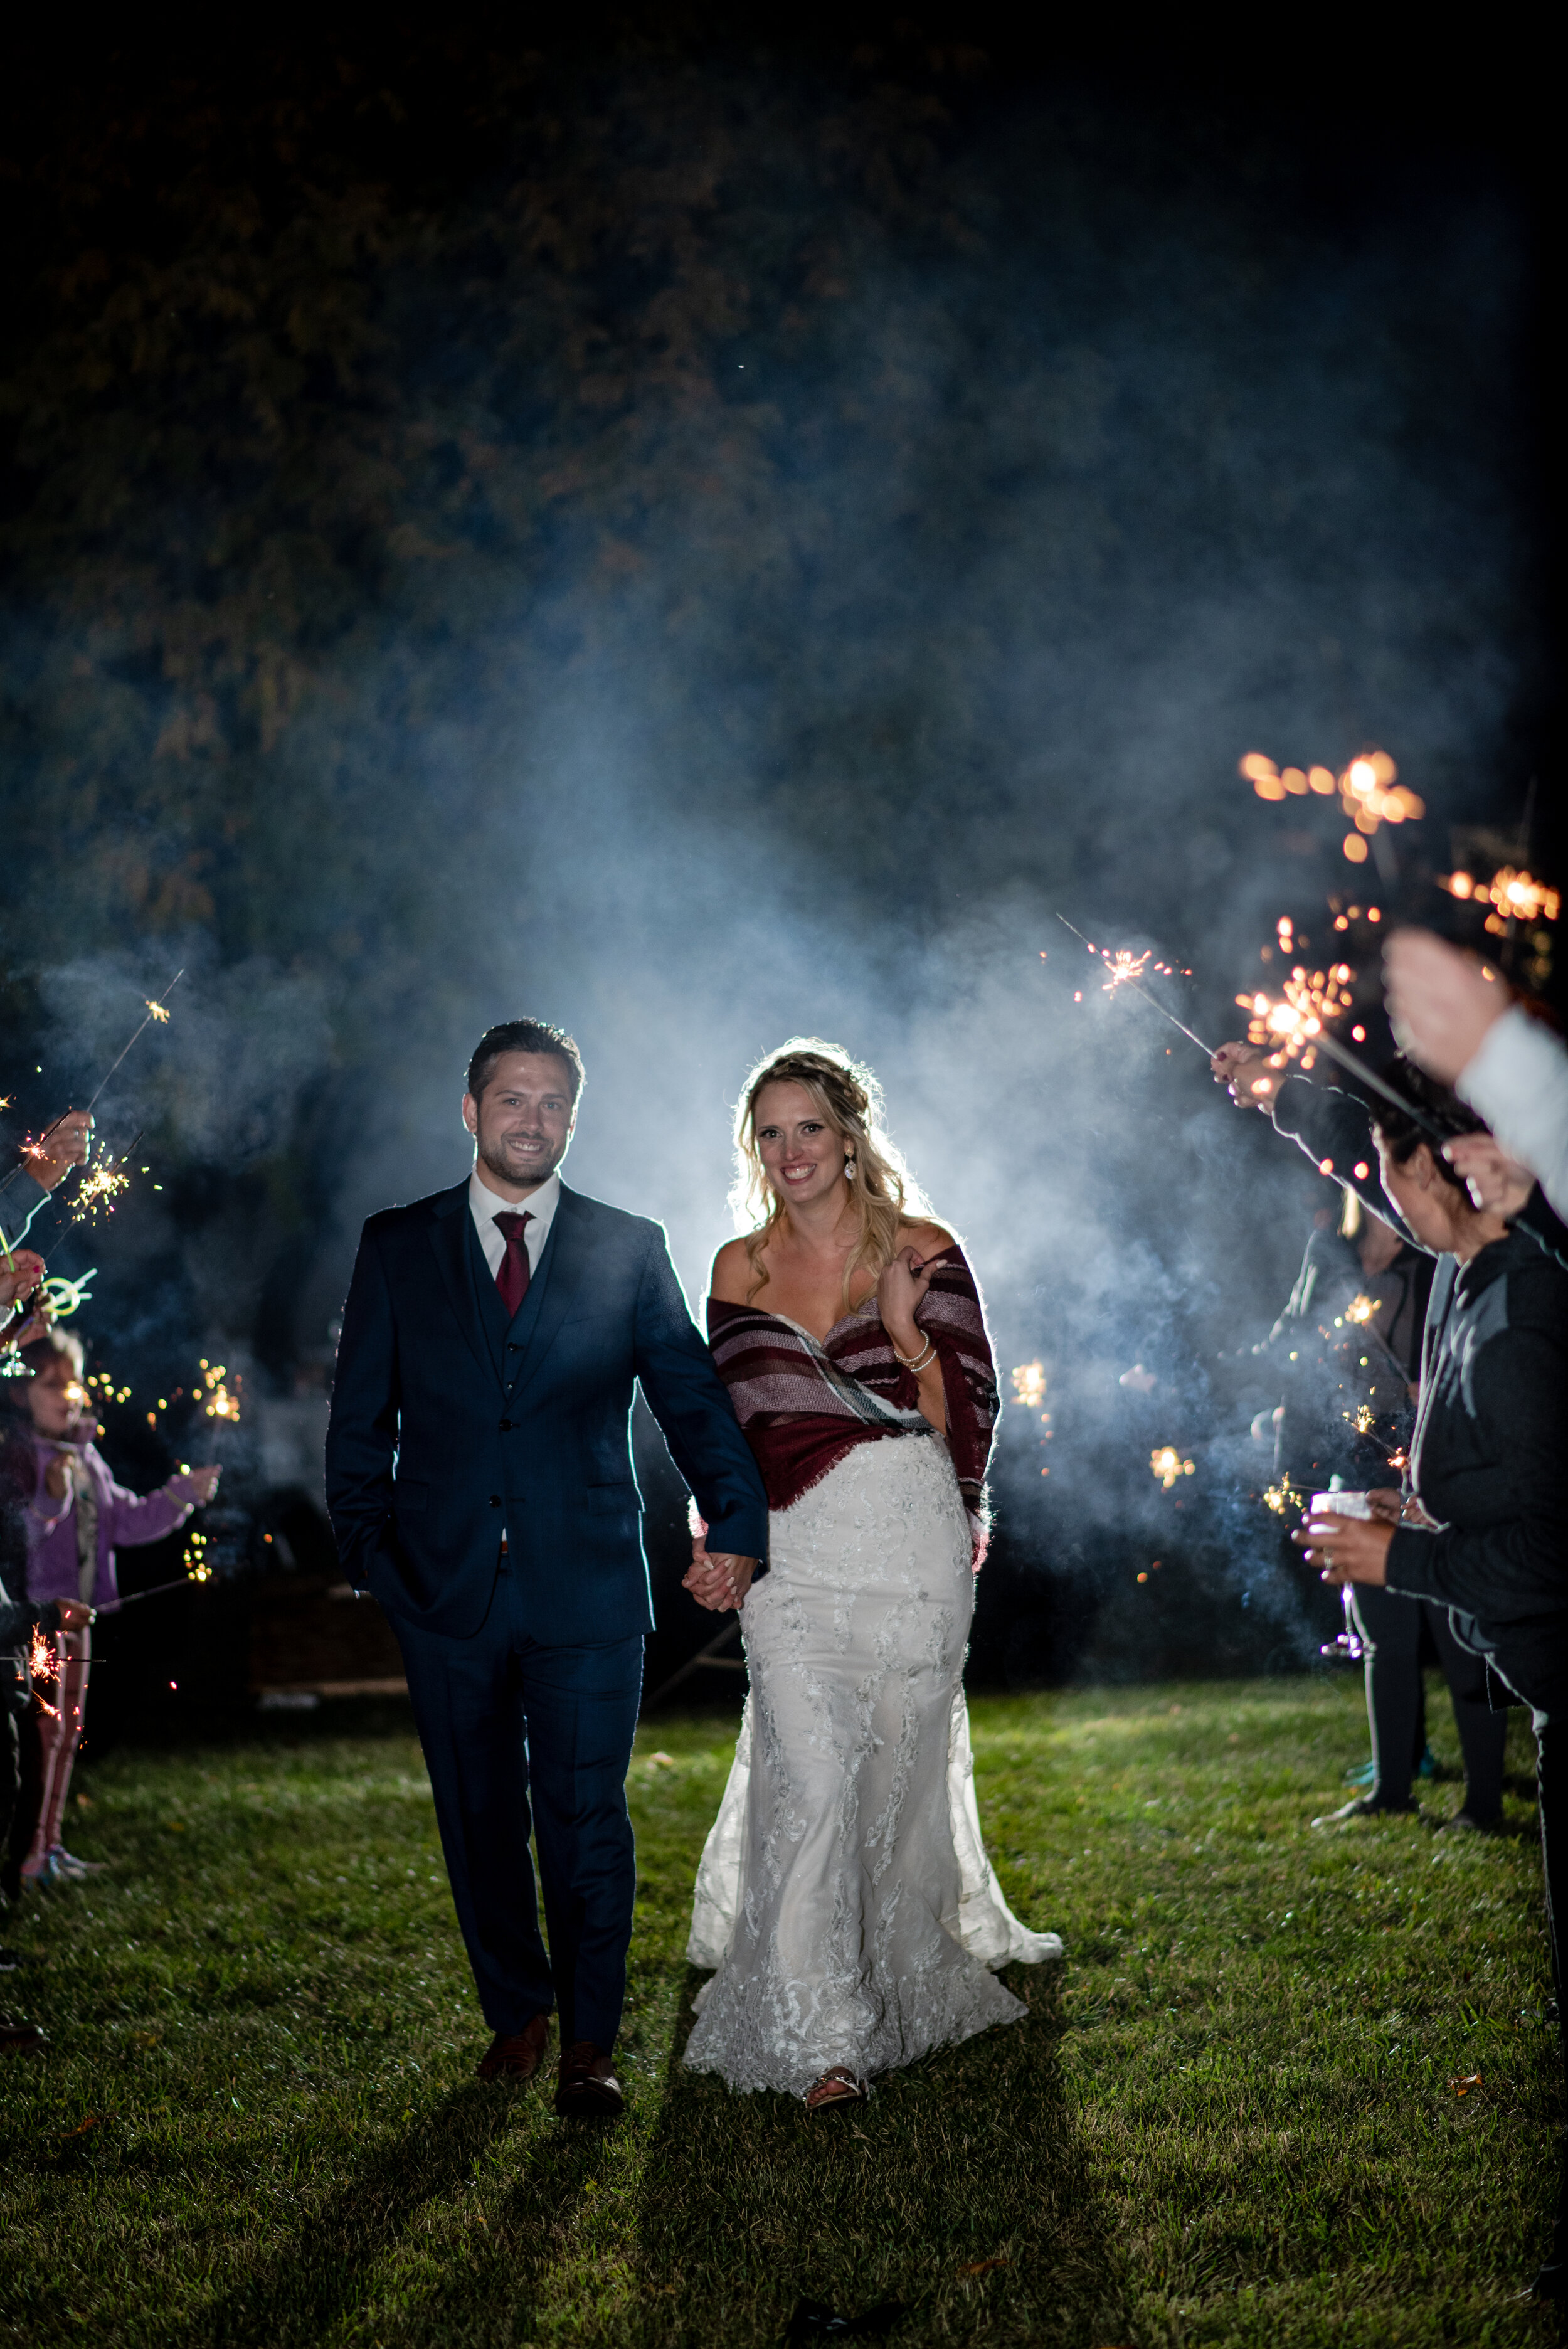 Walk through sparklers in evening wedding reception - eTangPhotography.com